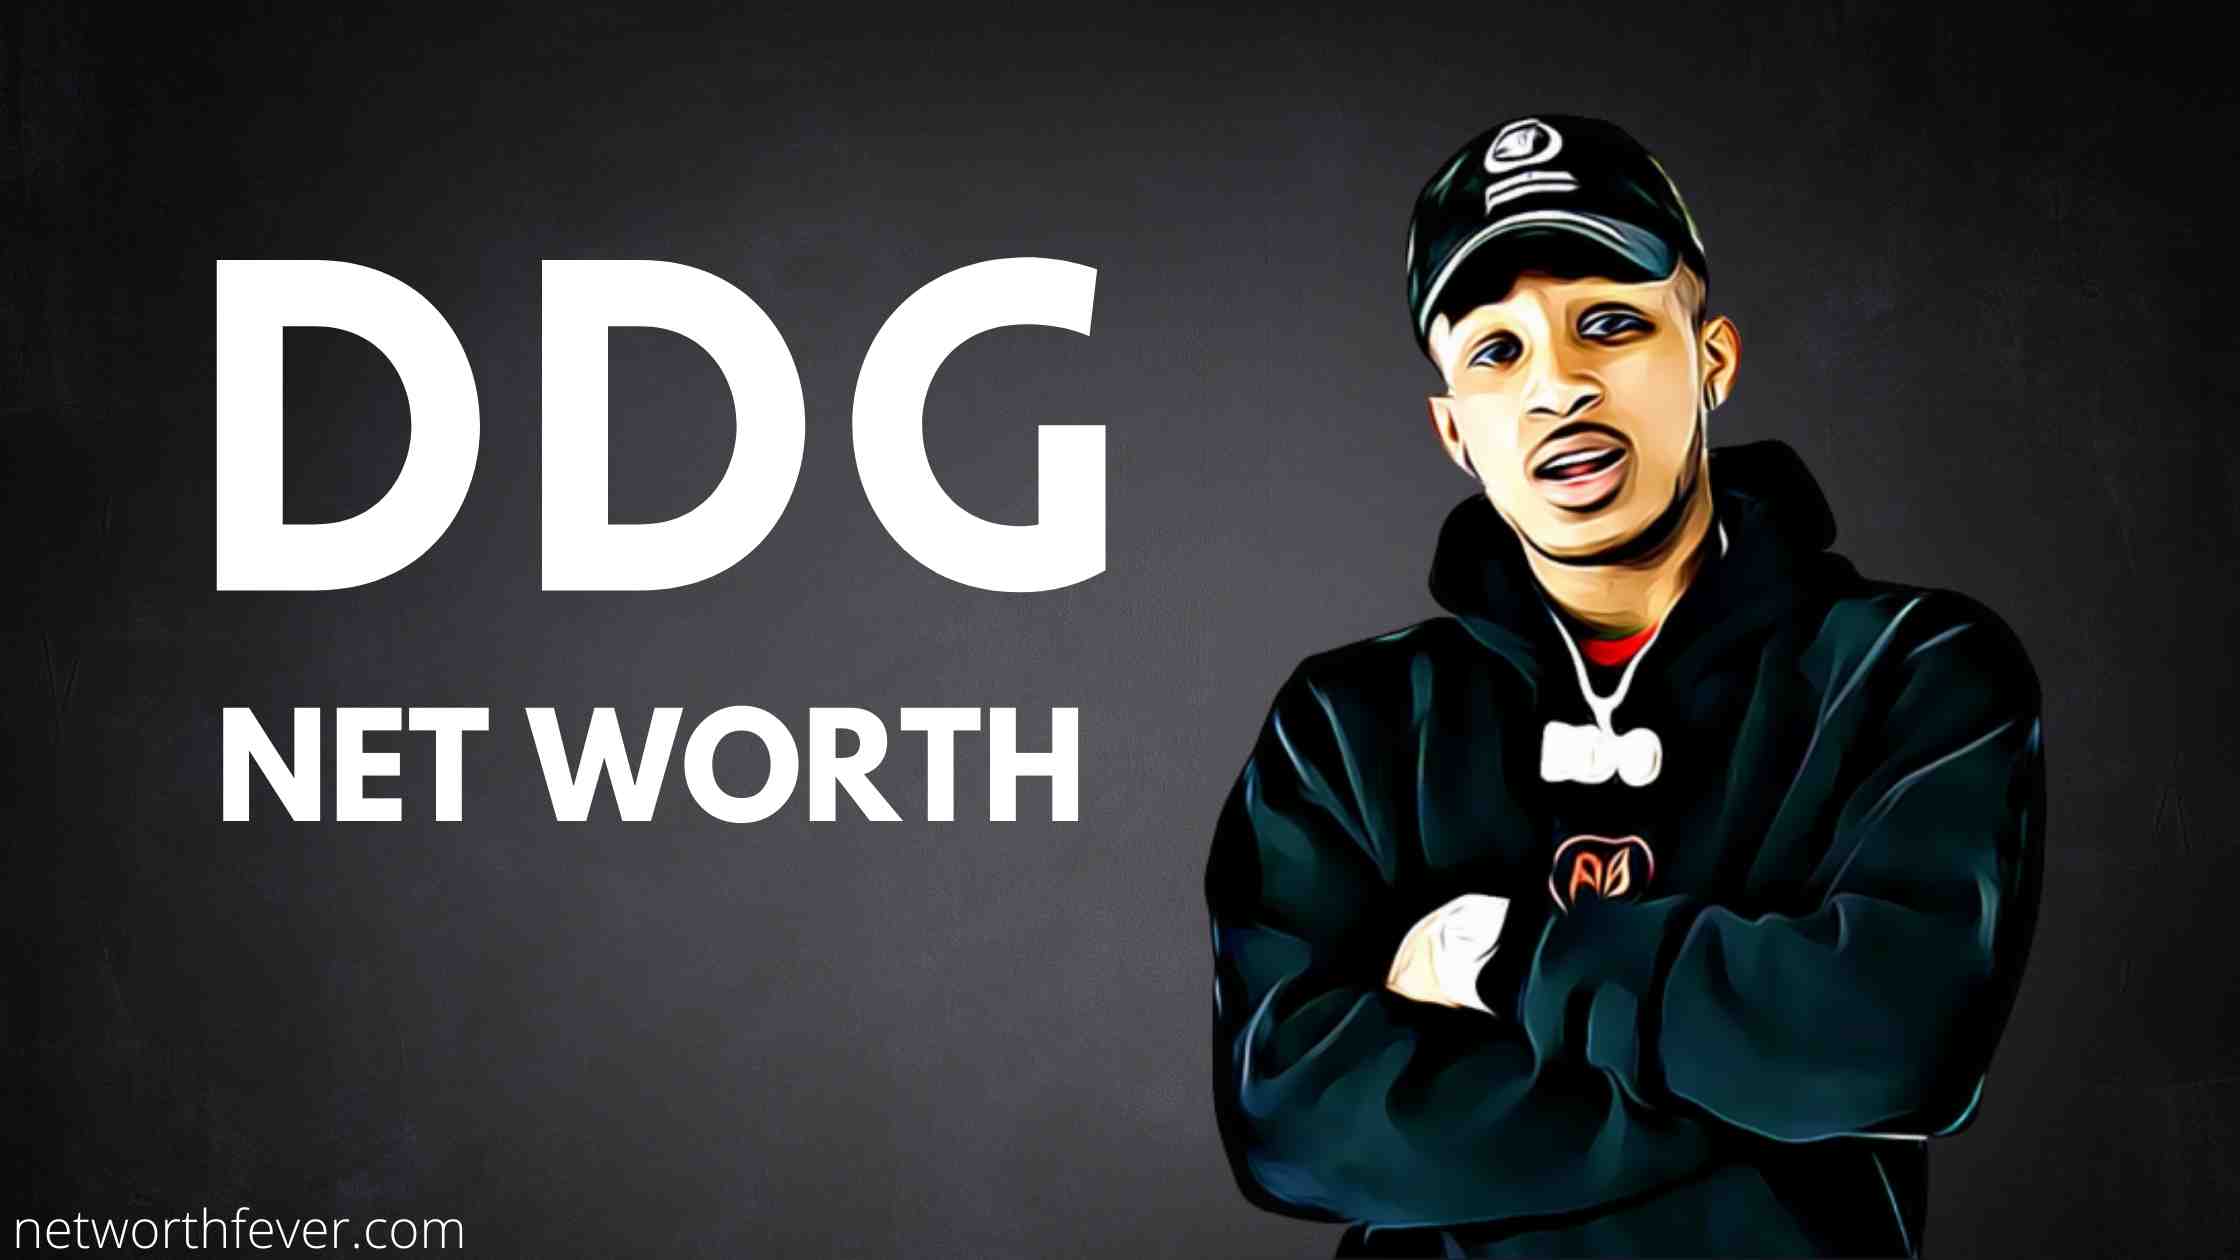 DDG Net Worth